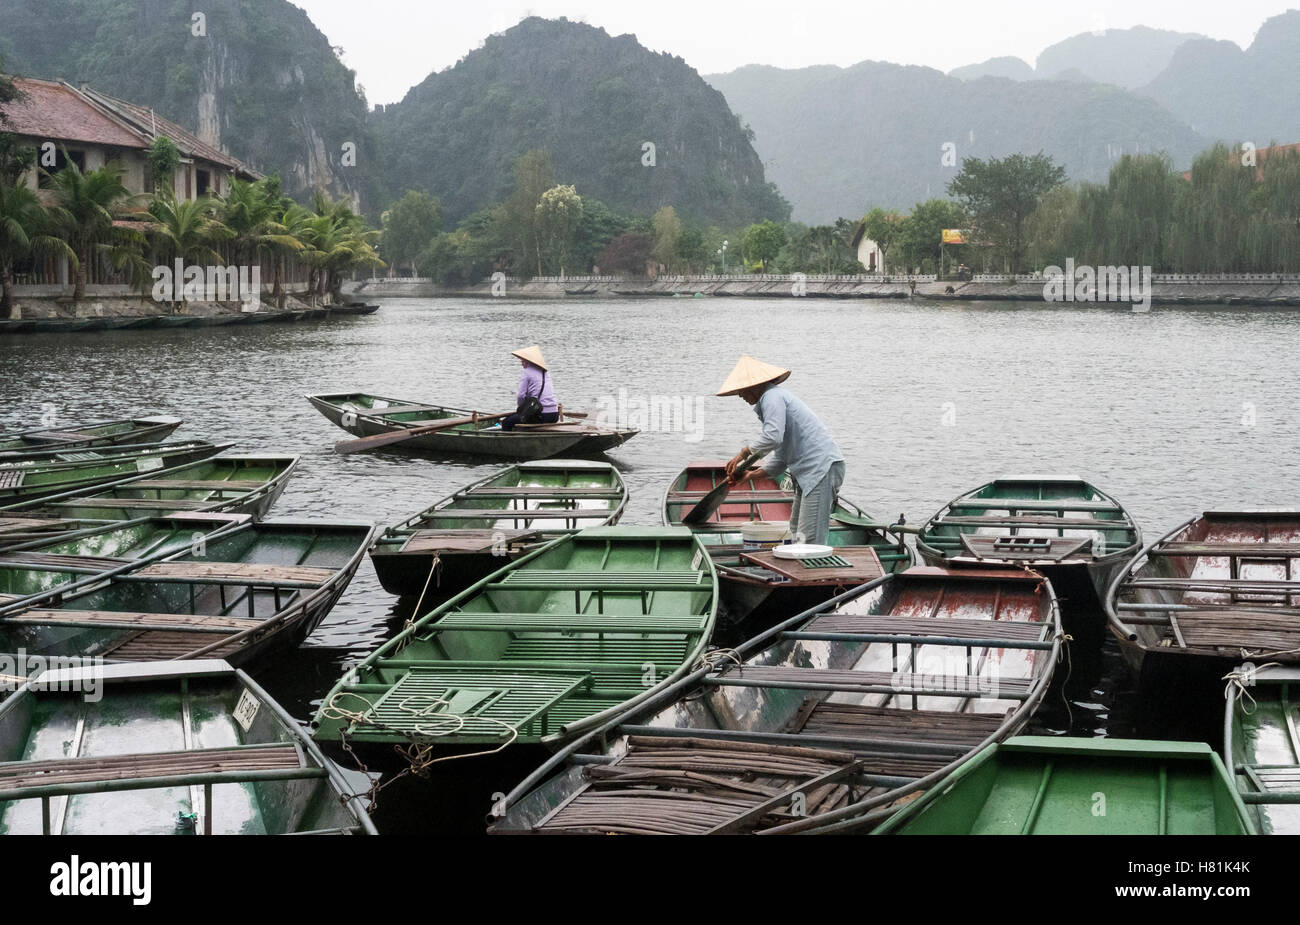 Boats in Tam Coc wharf, Ninh Binh province, Vietnam. Stock Photo